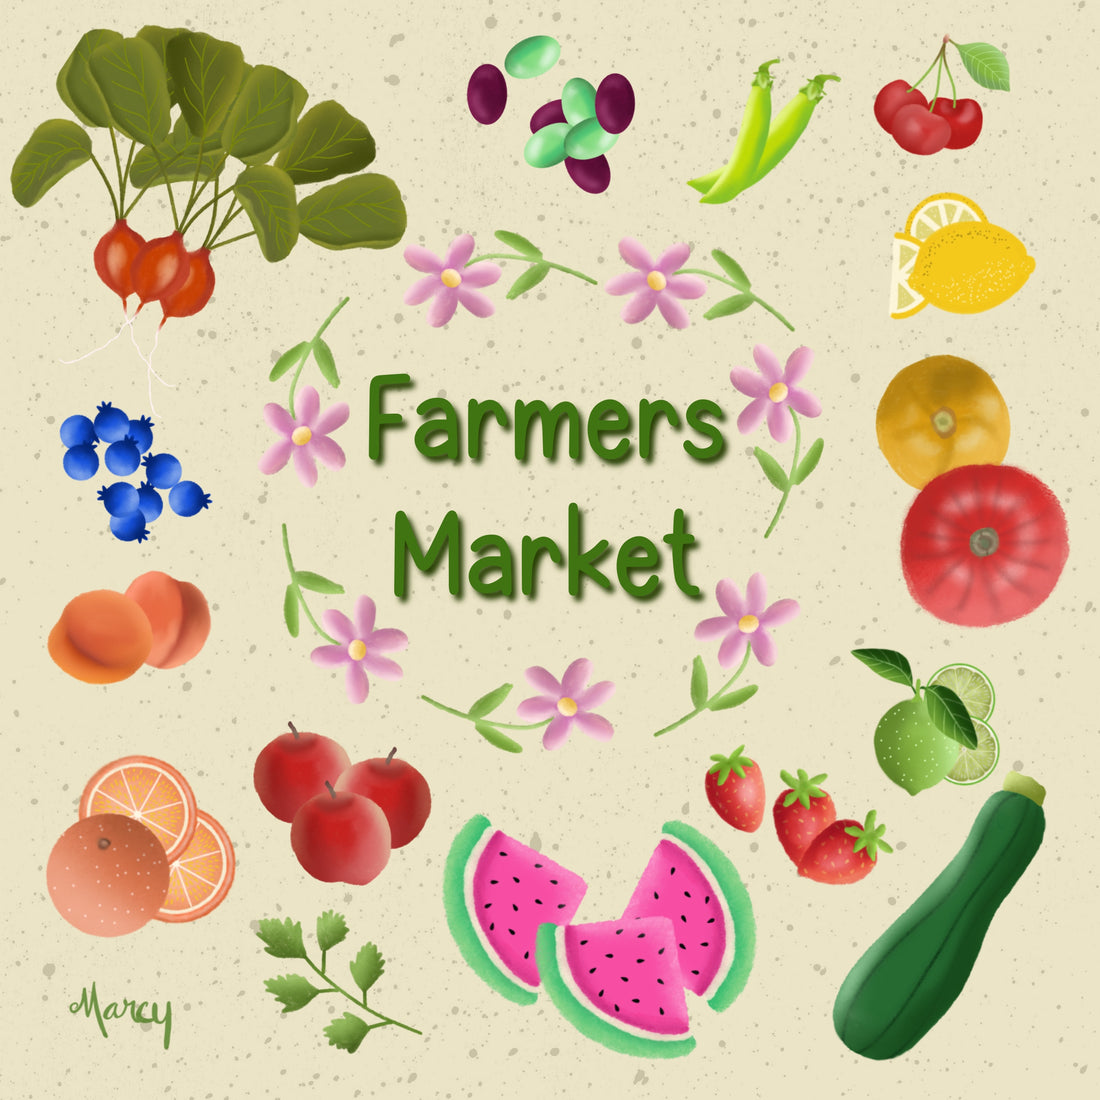 Farmers Market, fruits, vegetables, flowers, harvest, garden